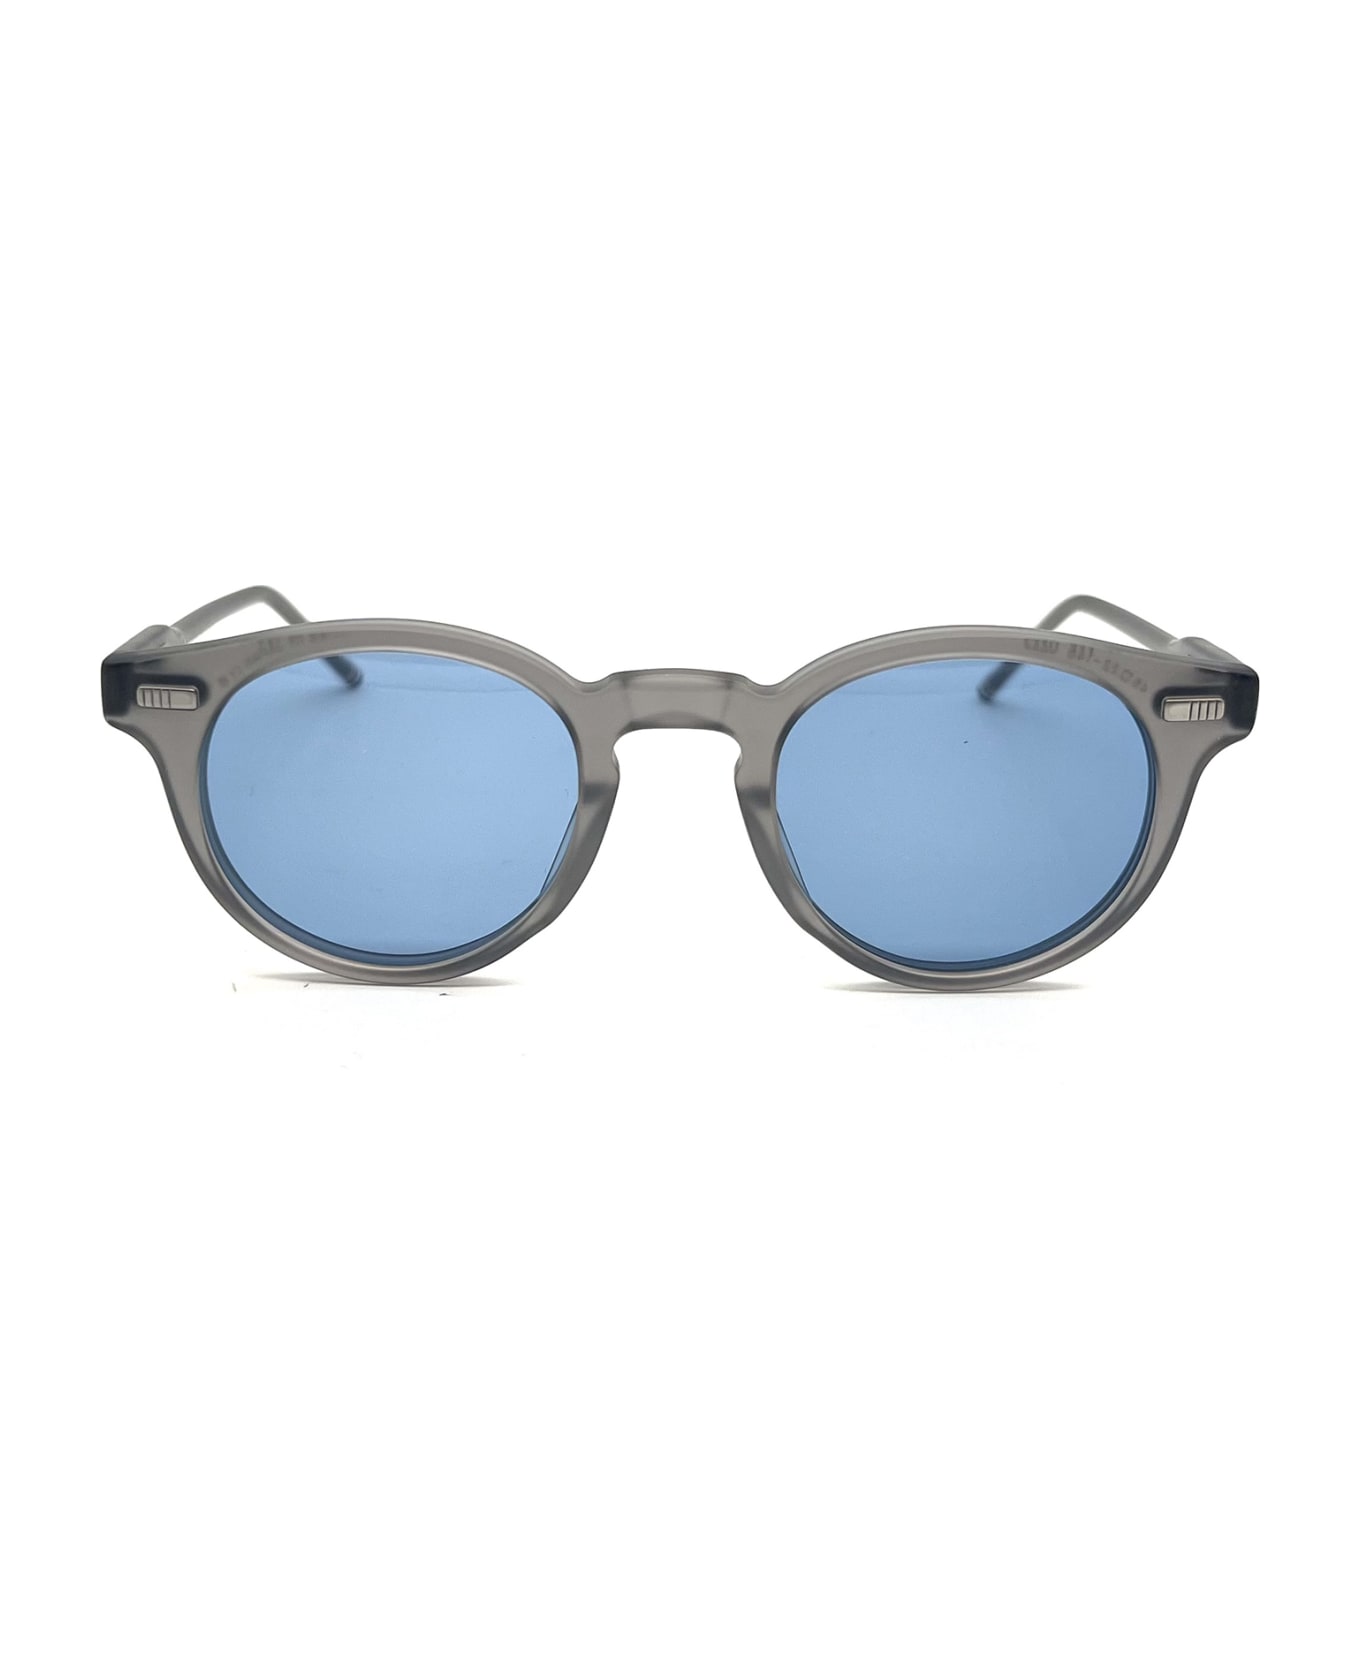 Thom Browne UES404A/G0002 Sunglasses - Light Grey